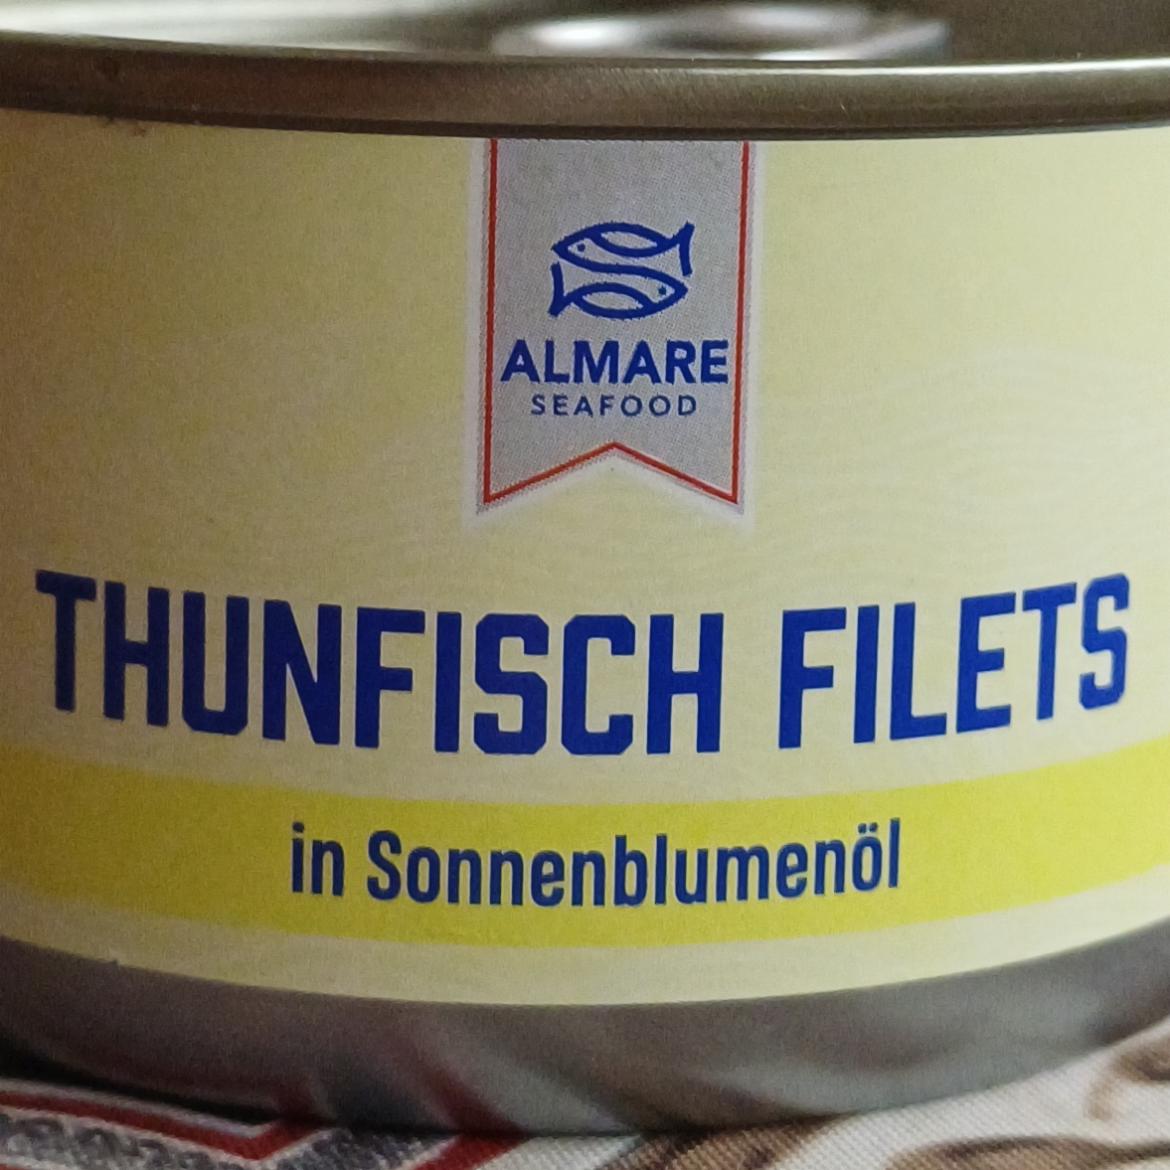 Képek - Thunfisch filets in sonnenblumenöl Almare Seafood